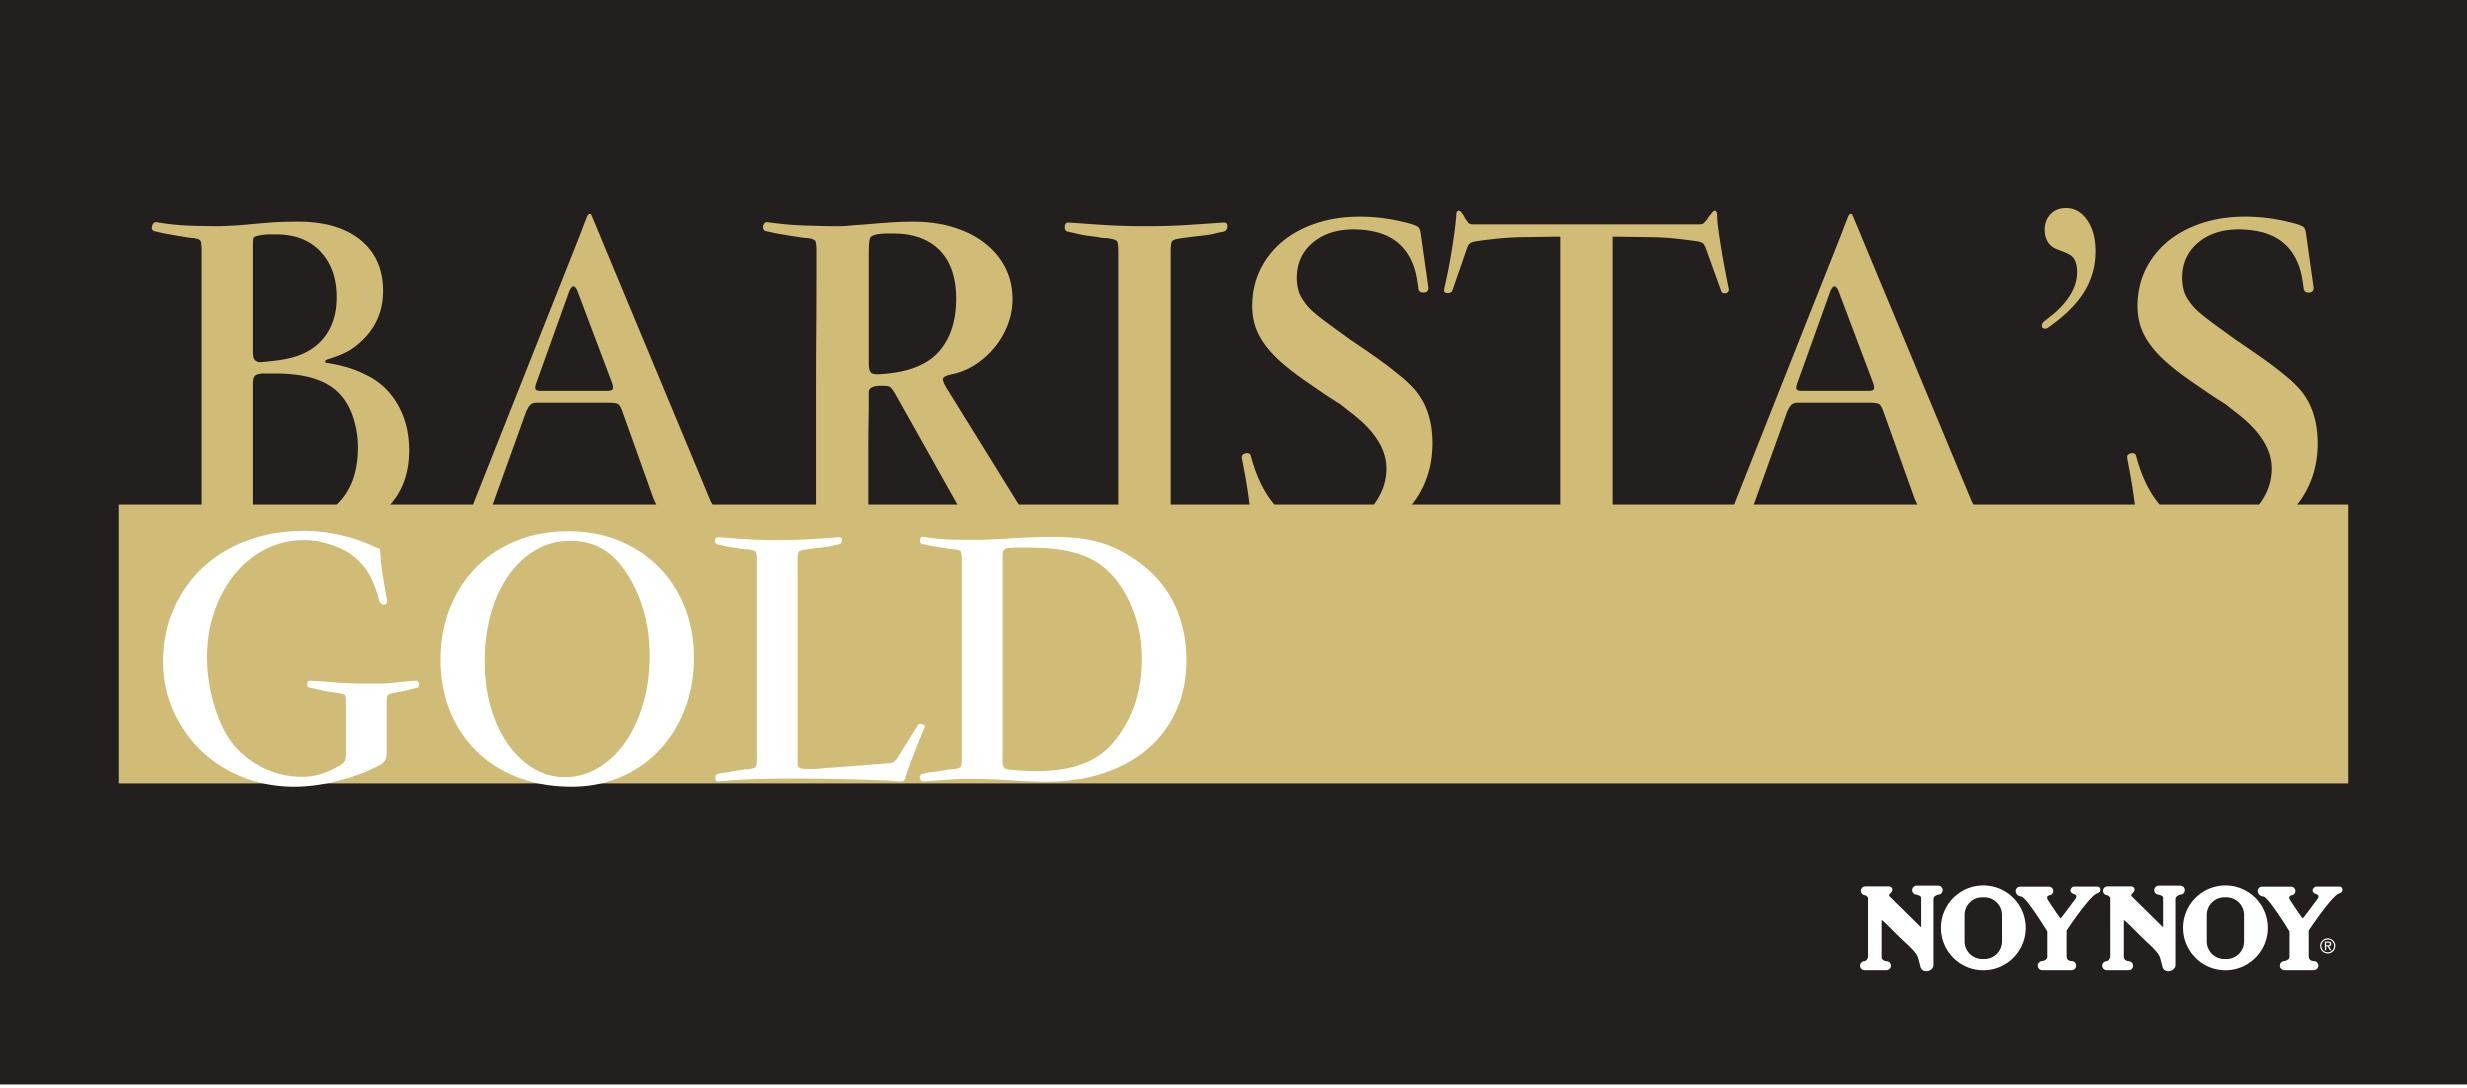 baristas-gold-friesland-logo